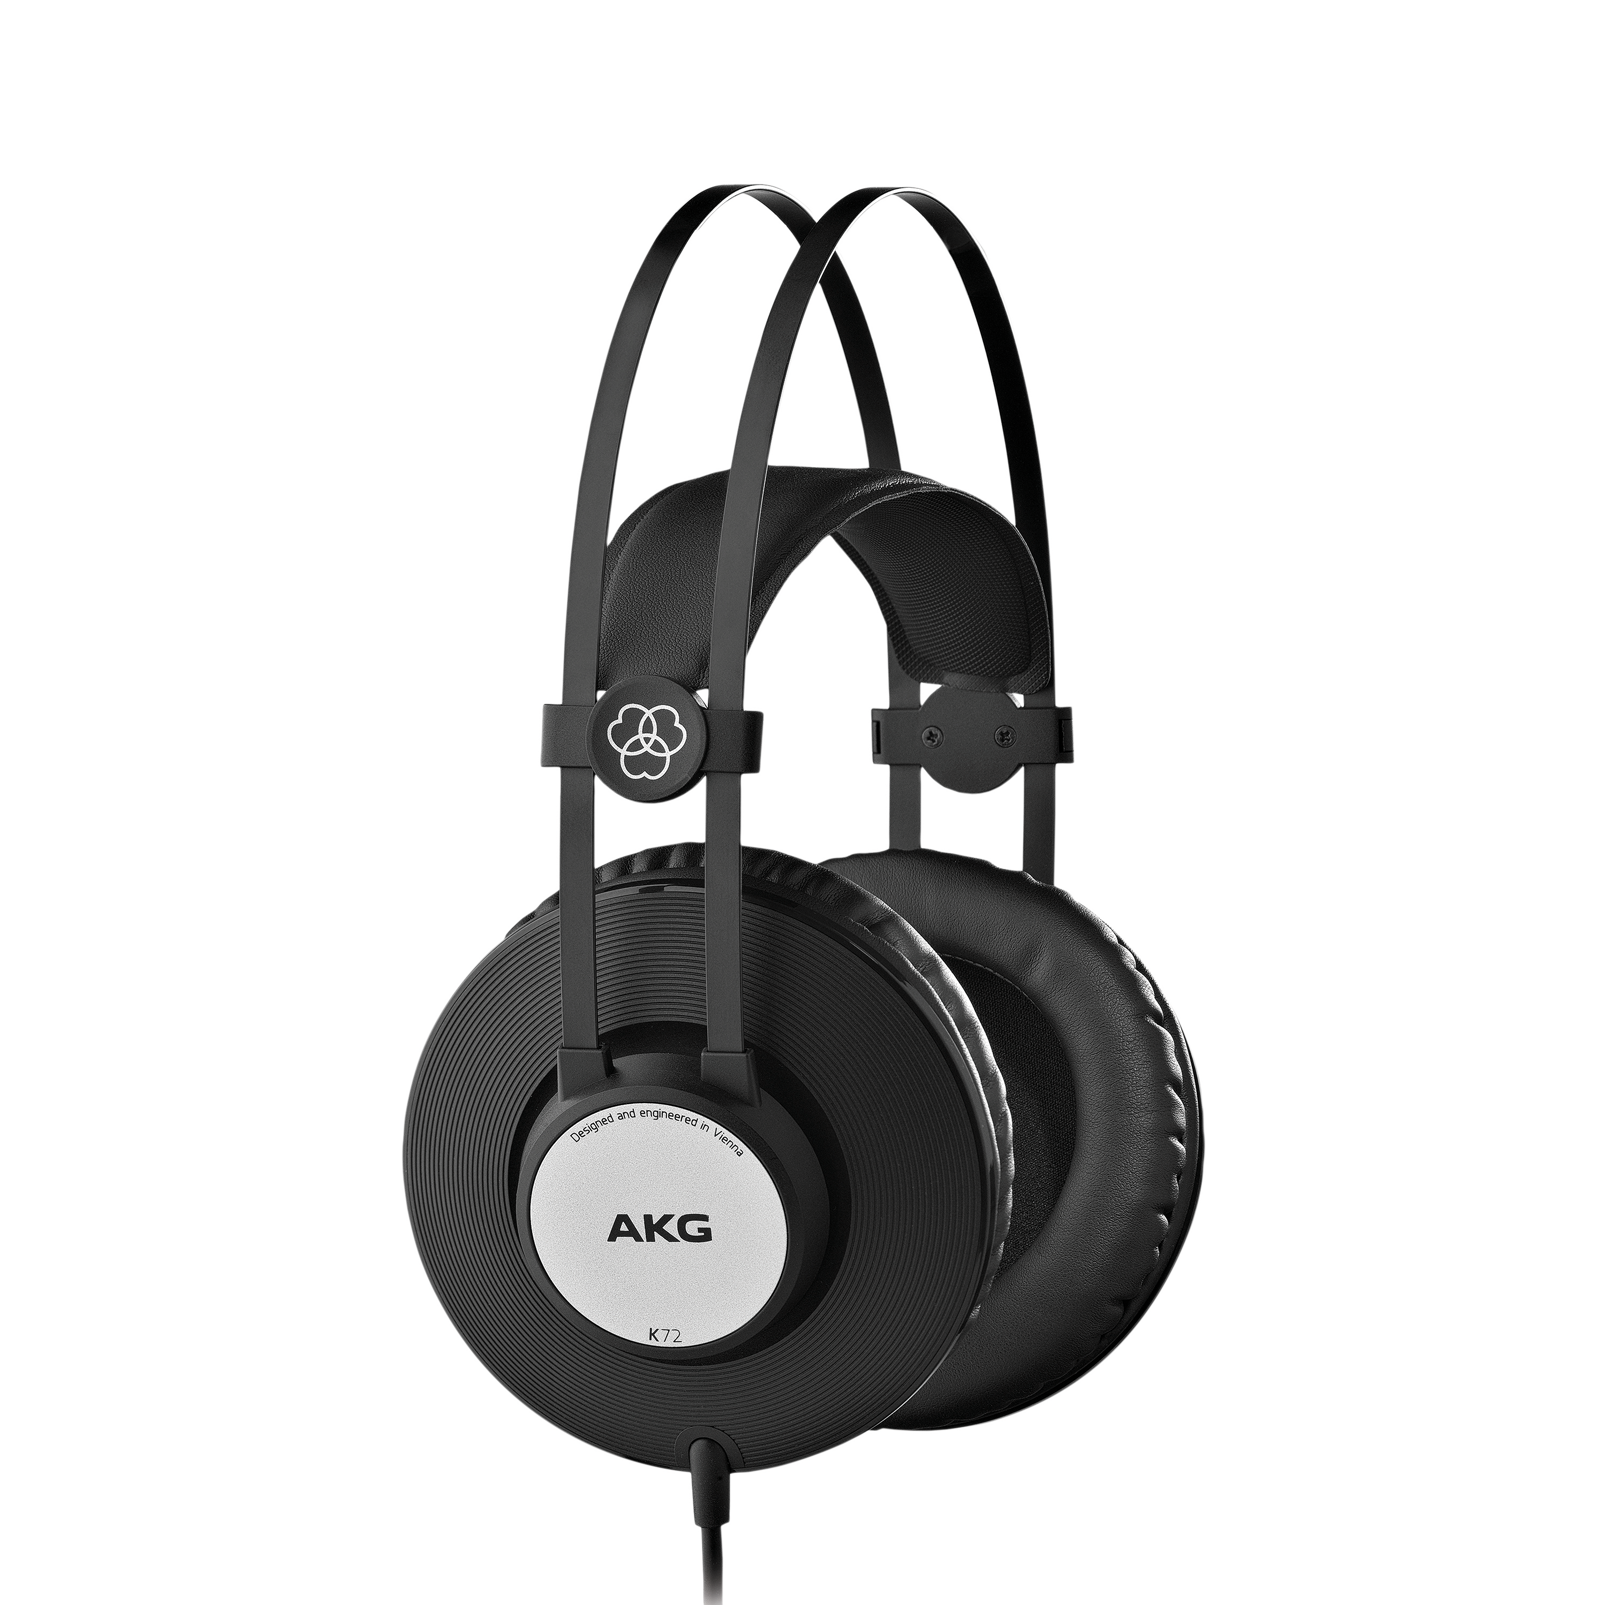 K72 - Black - Closed-back studio headphones - Hero